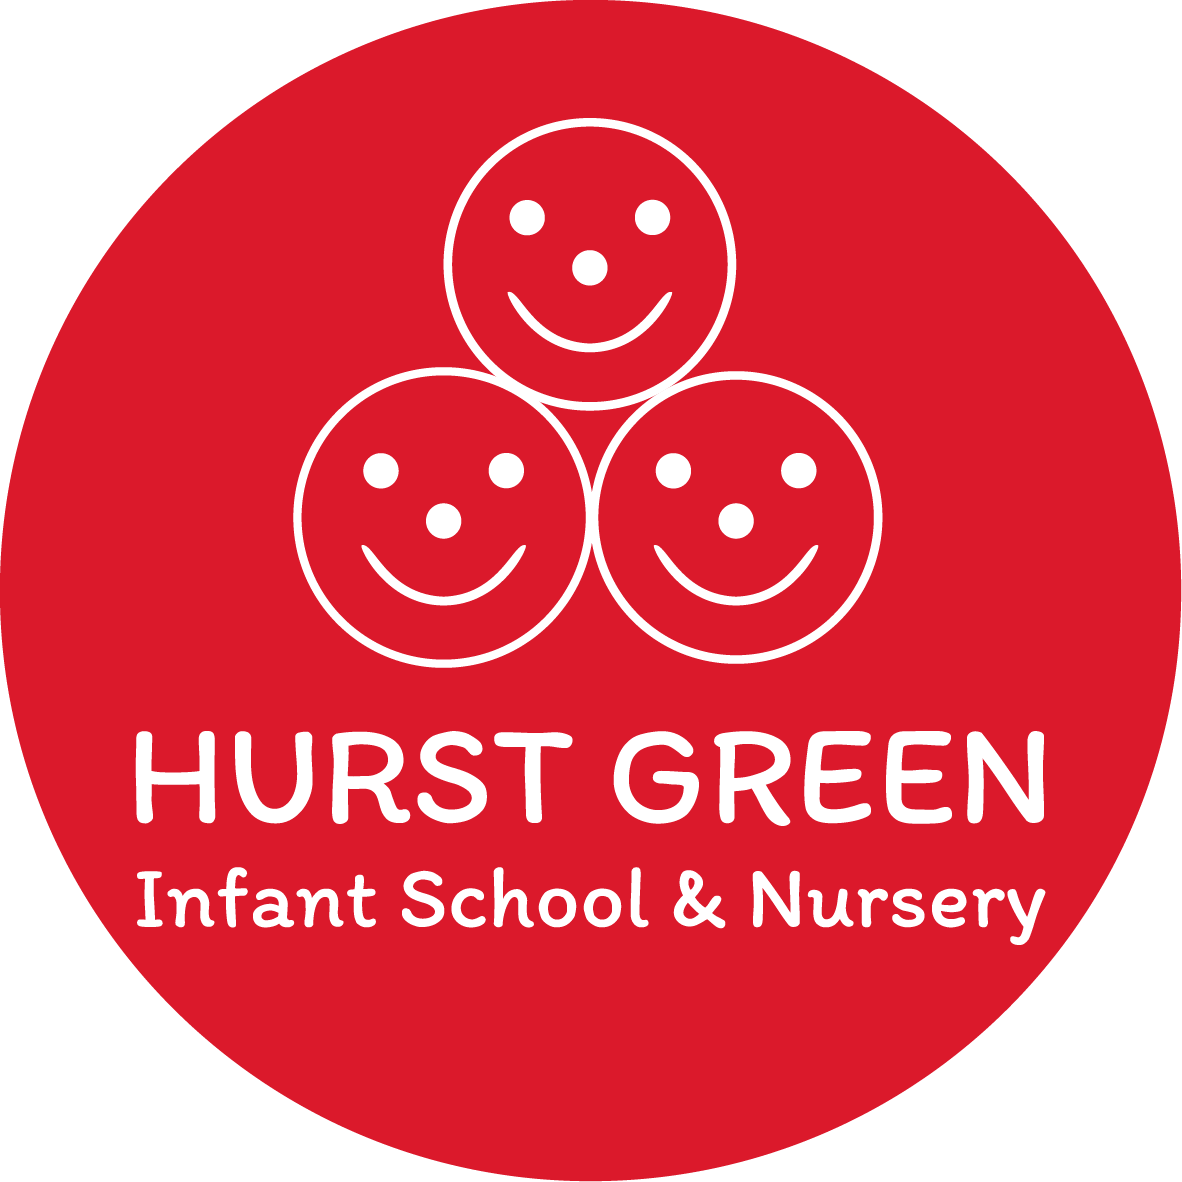 Hurst Green Infant School & Nursery